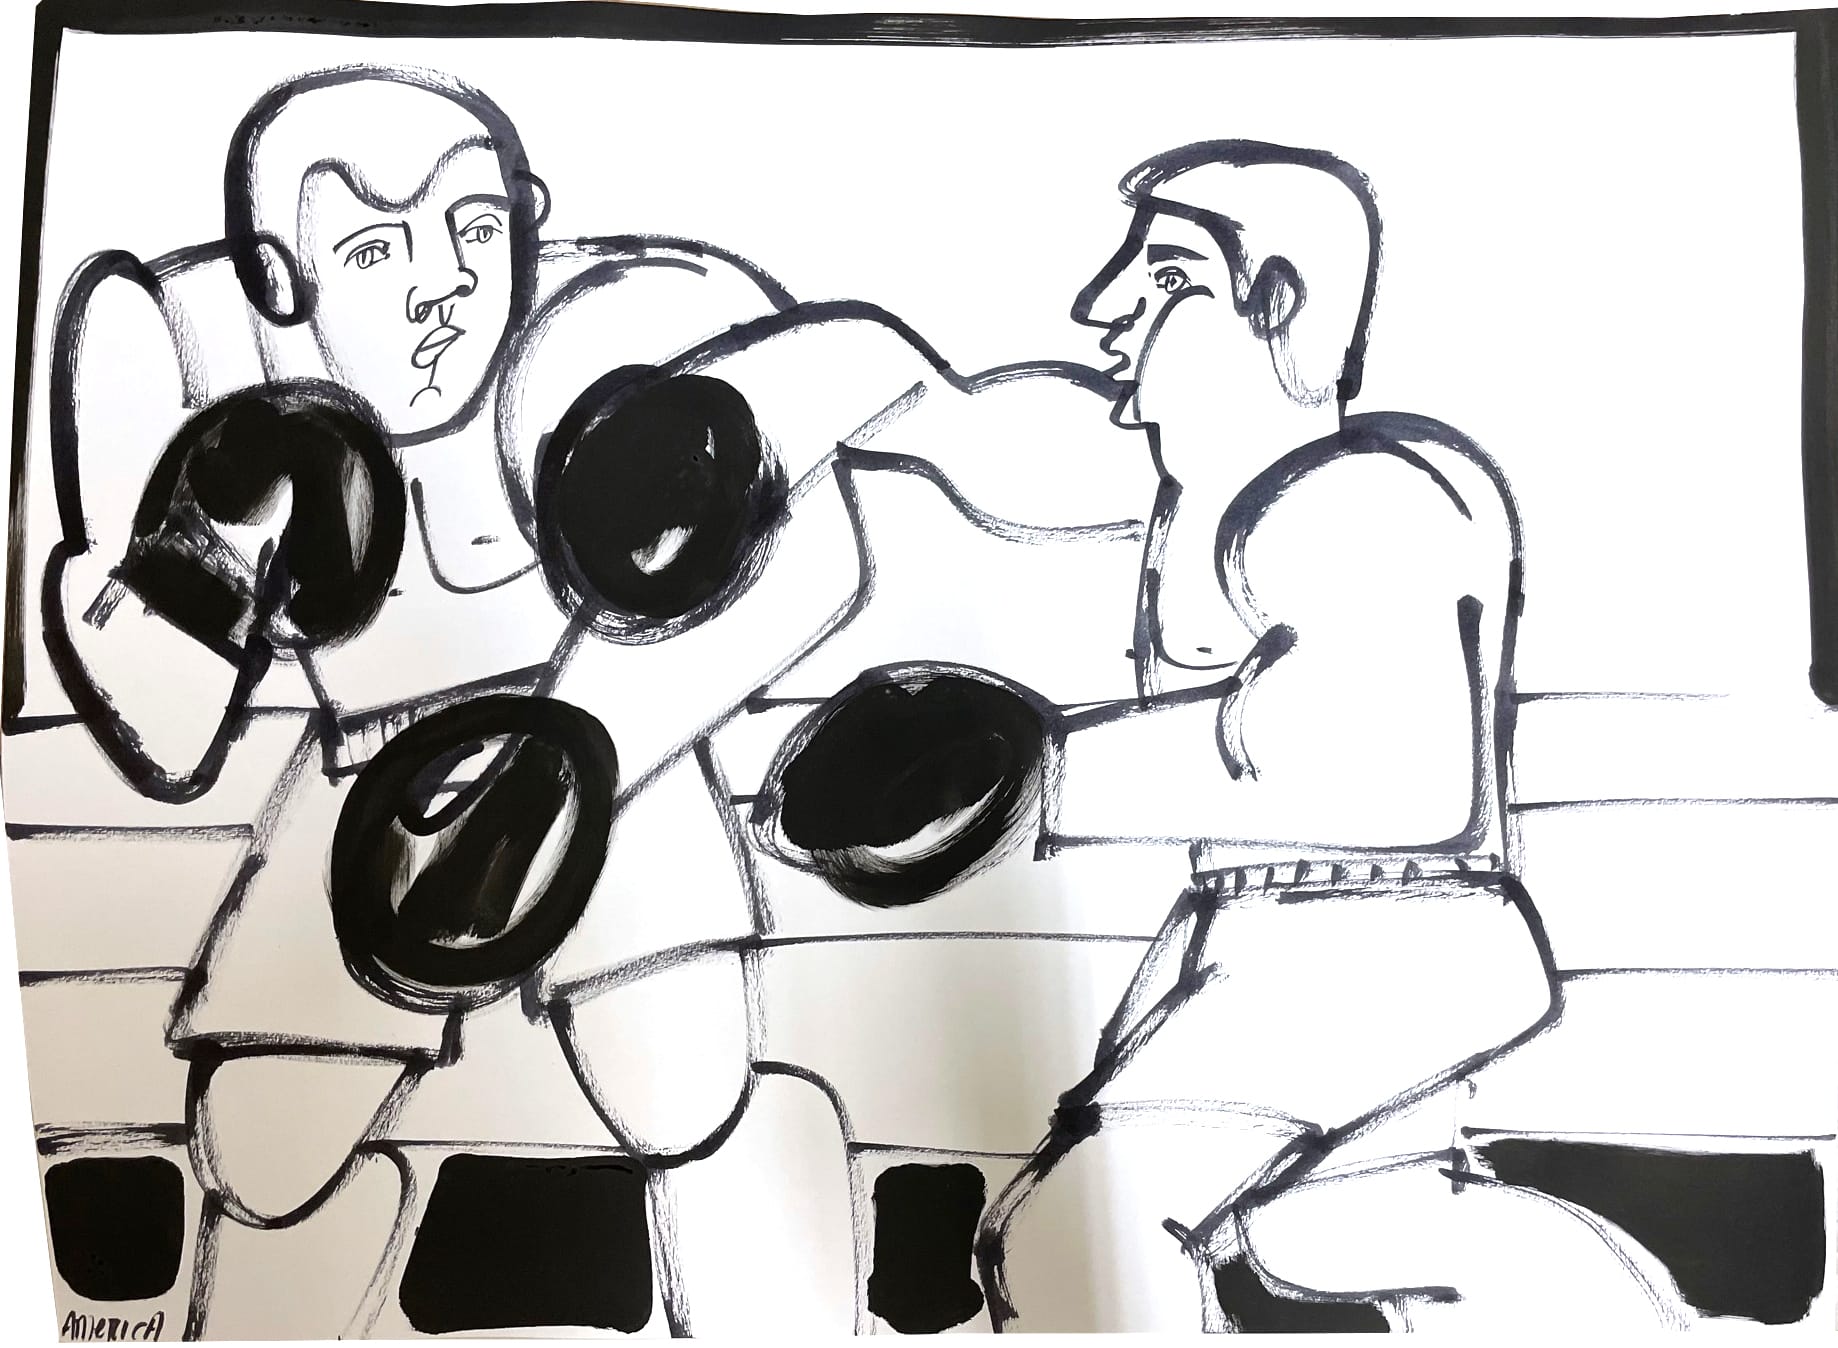 boxer i, america martin, ink on paper, black and white figurative